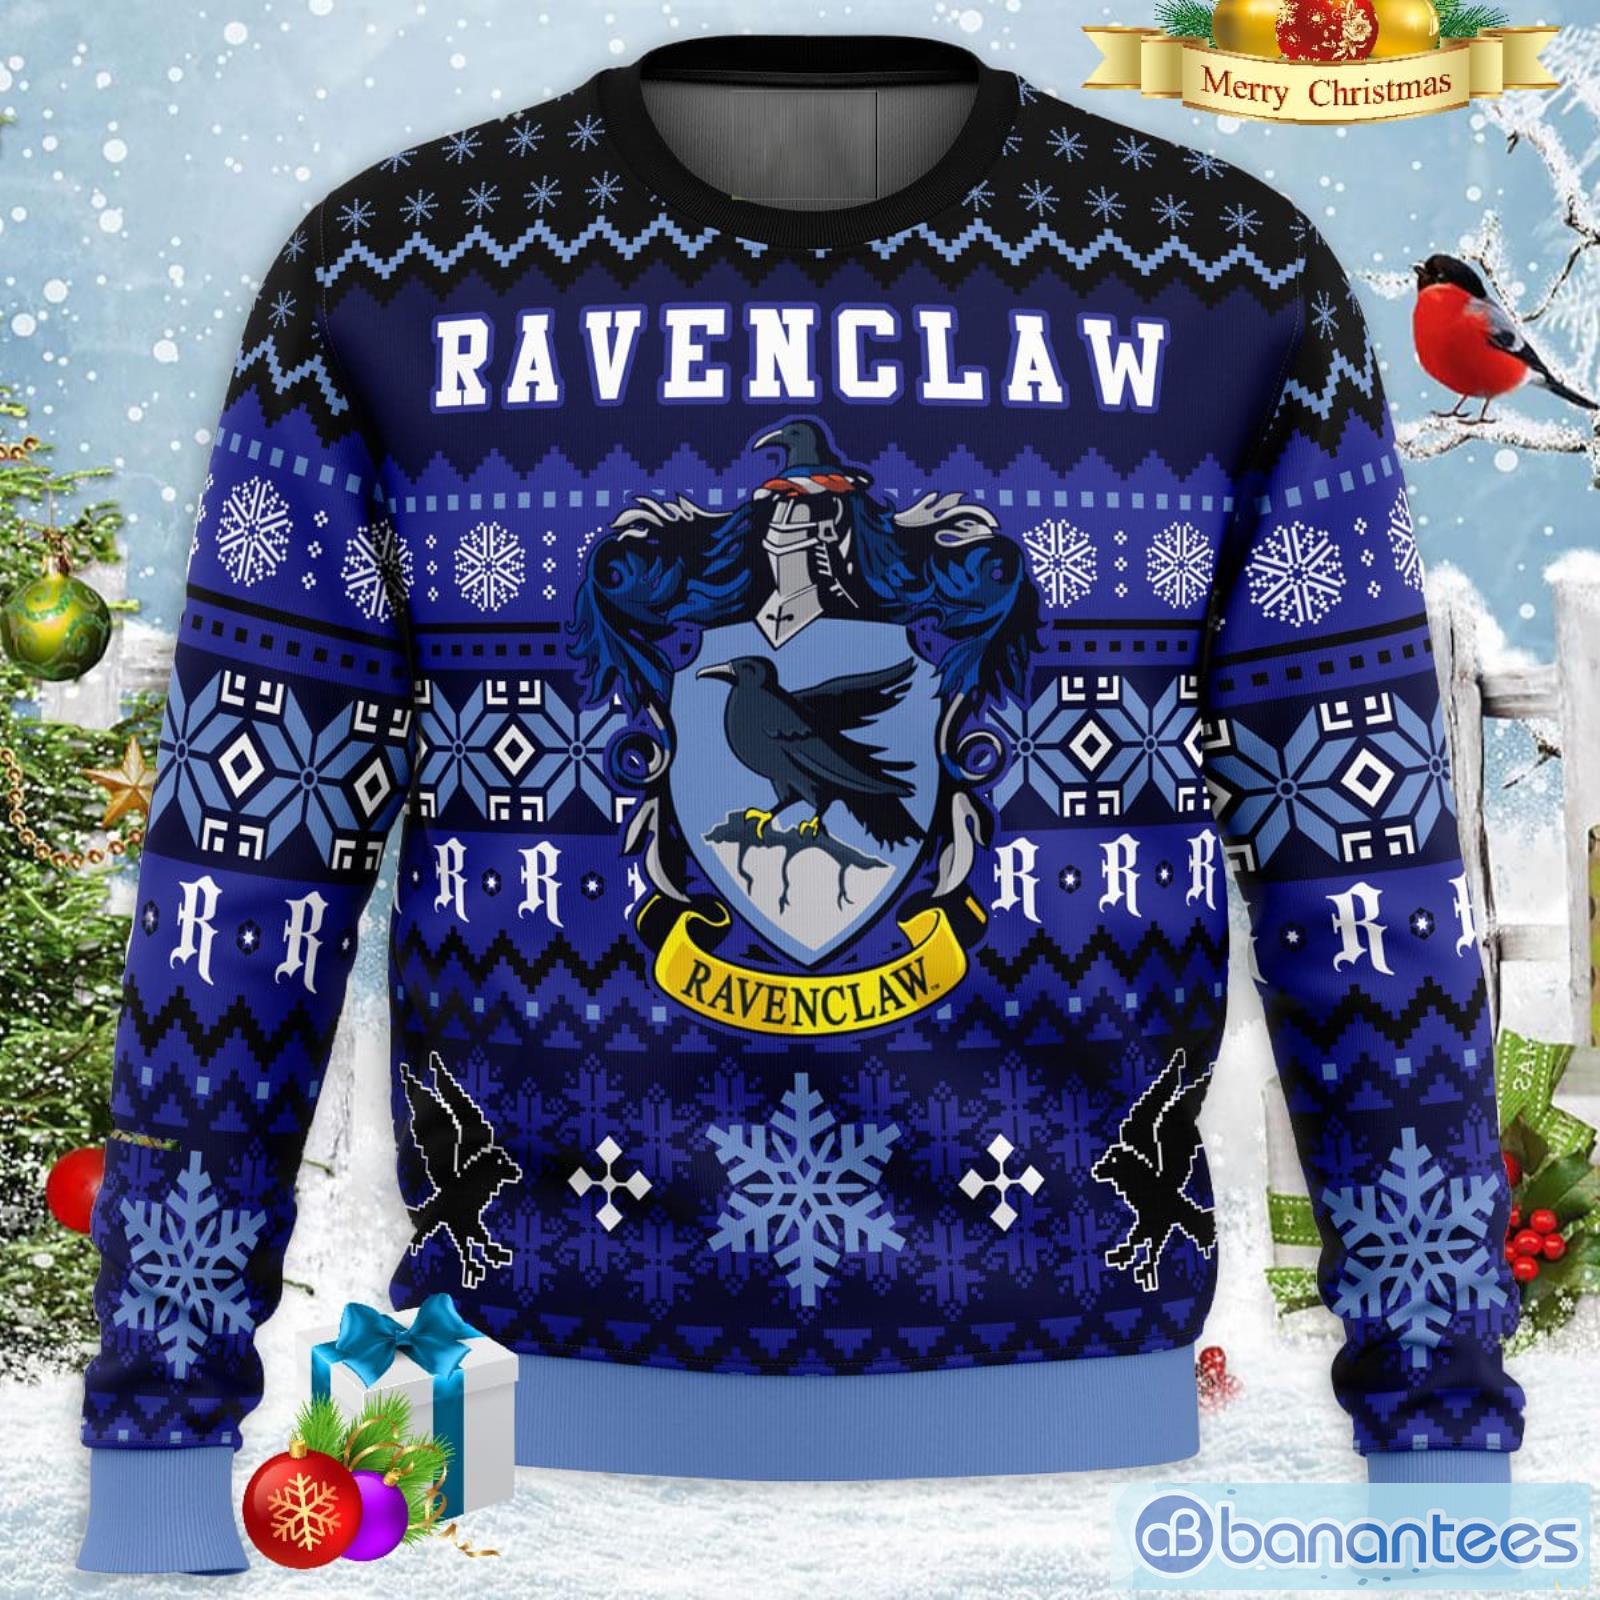 Women's Harry Potter Ravenclaw House Crest T-shirt : Target